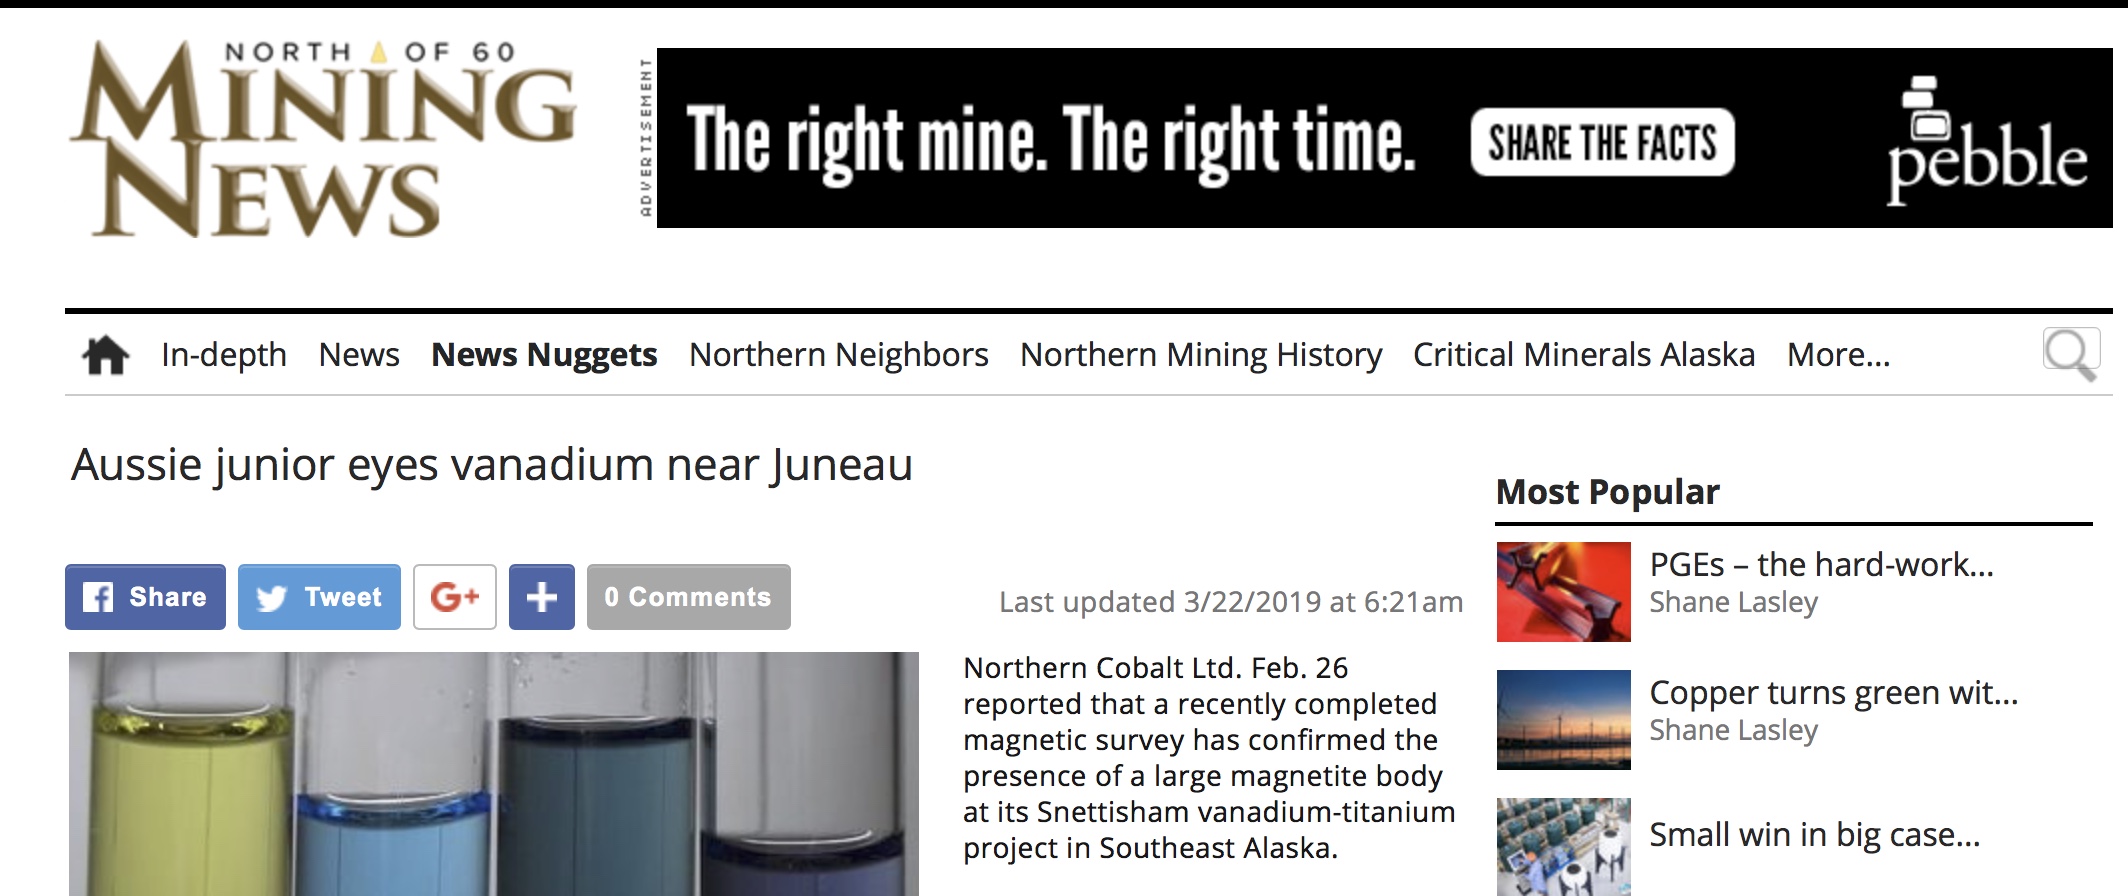 mining news north article